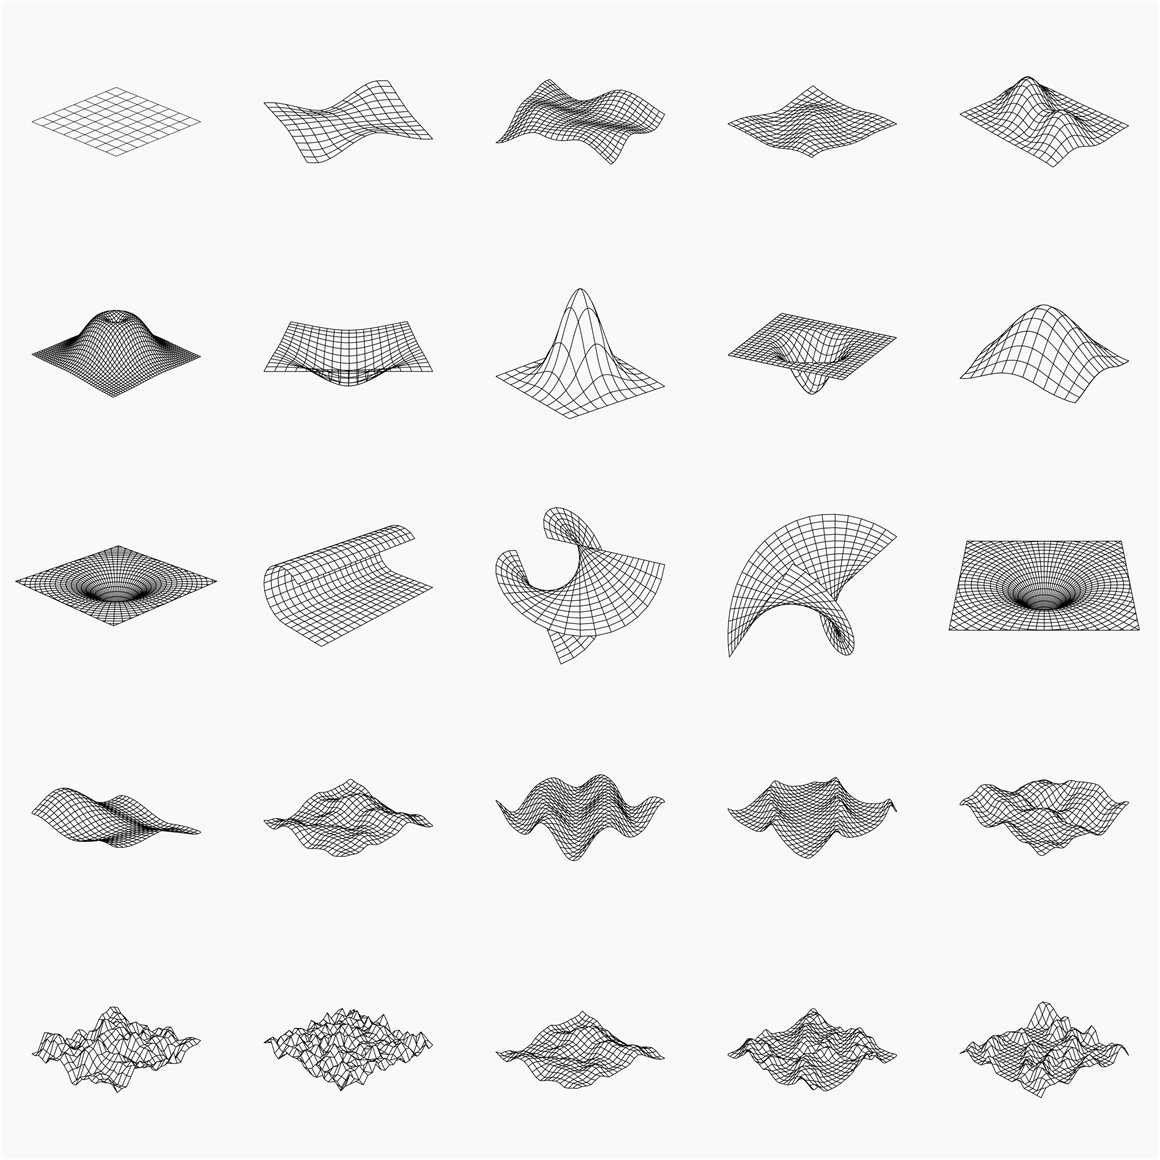 LS.GRAPHICS 350多款未来赛博朋克科幻酸性点线面3d立体几何构成抽象机能图形设计素材 350+ Abstract Contours Shapes 图片素材 第16张